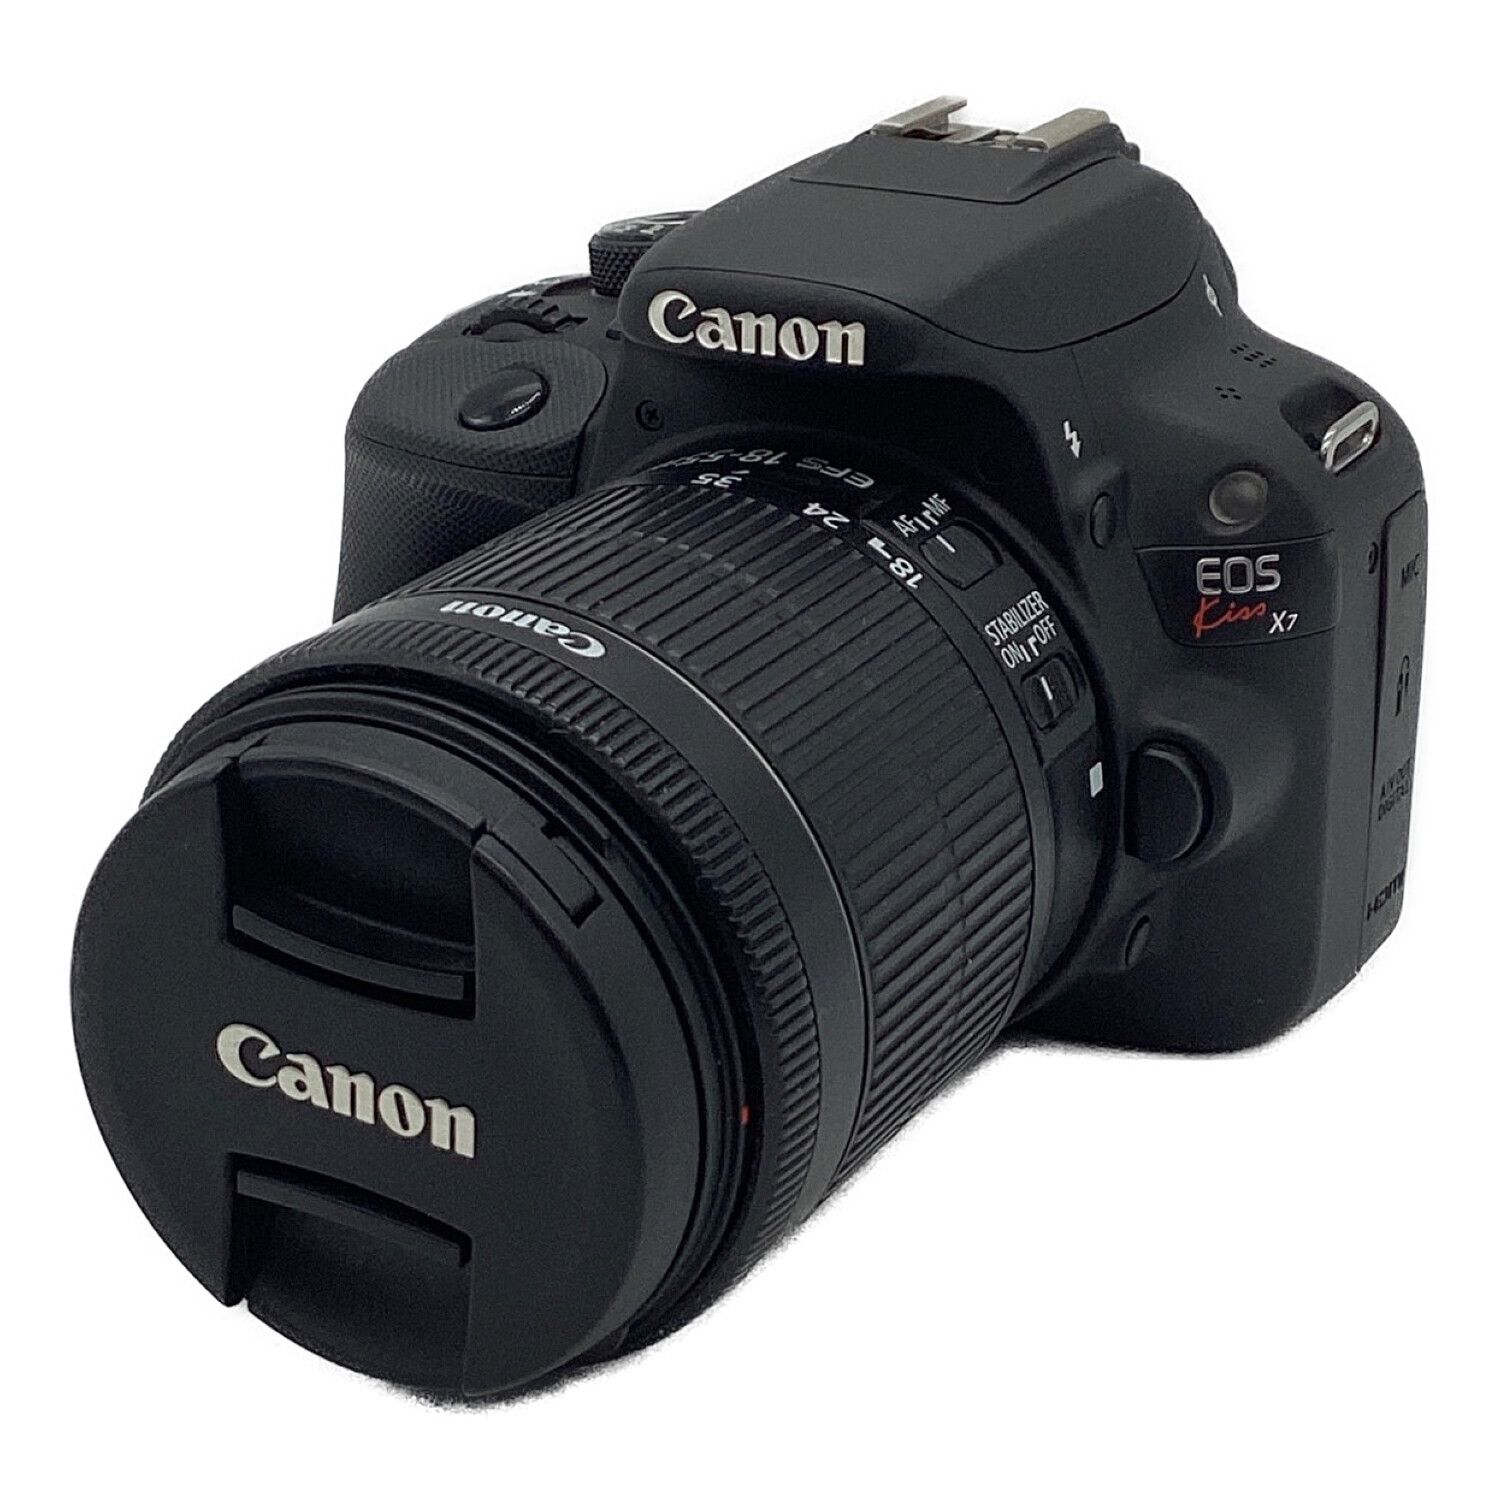 CANON (キャノン) 一眼レフカメラ 2013年 KISS X7 DS126441 1800万画素 